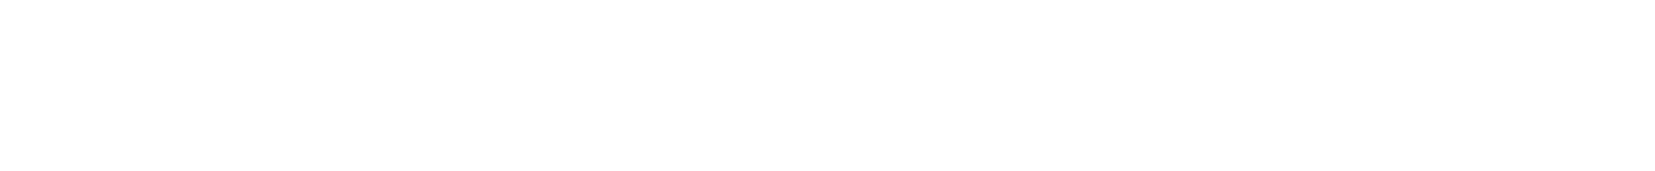 titanxq logo